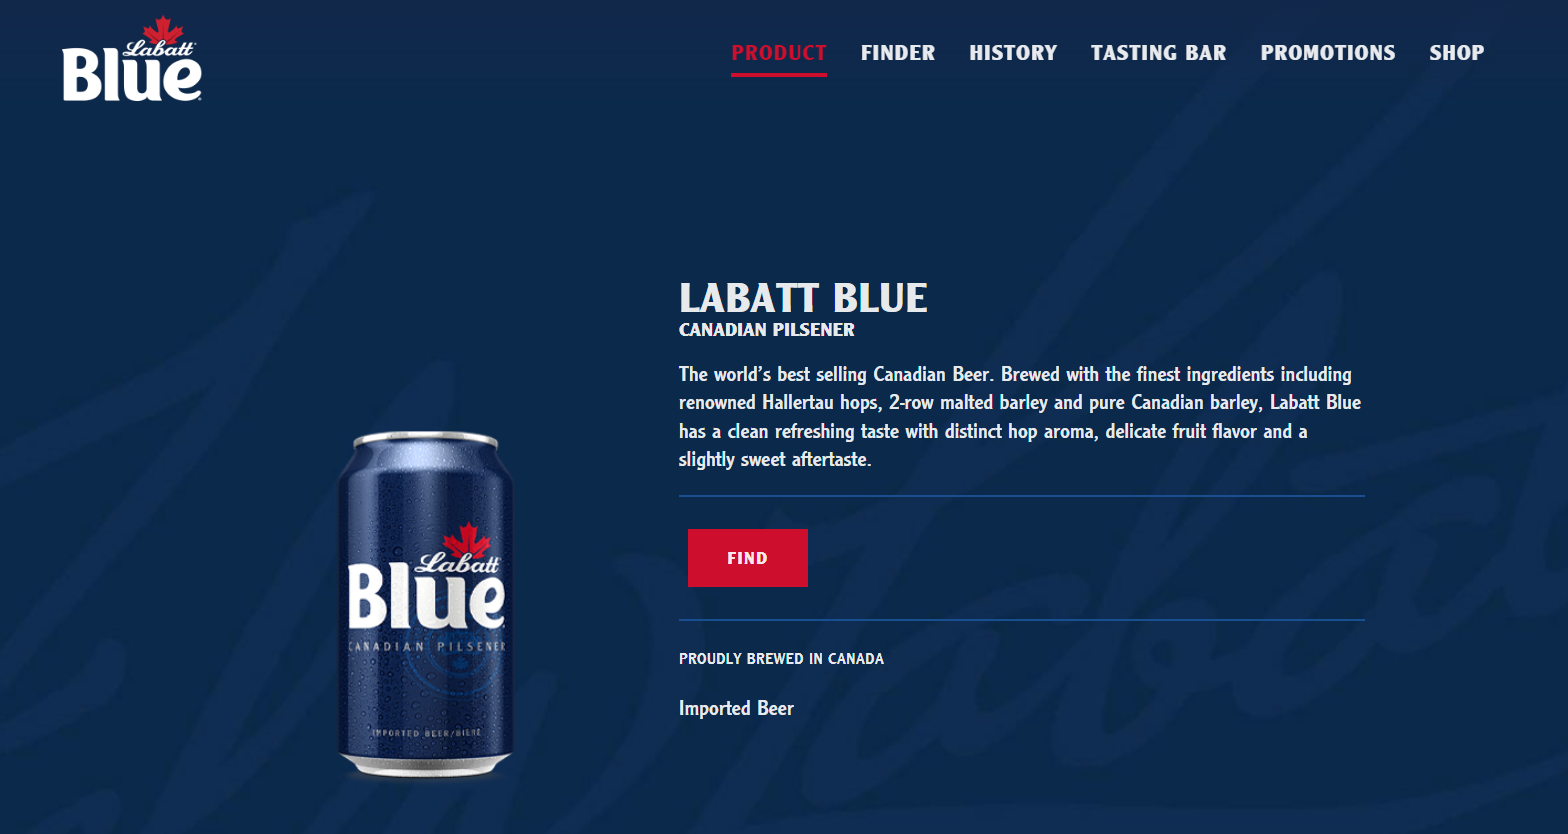 Labatt Blue Rebate Offer - wide 9